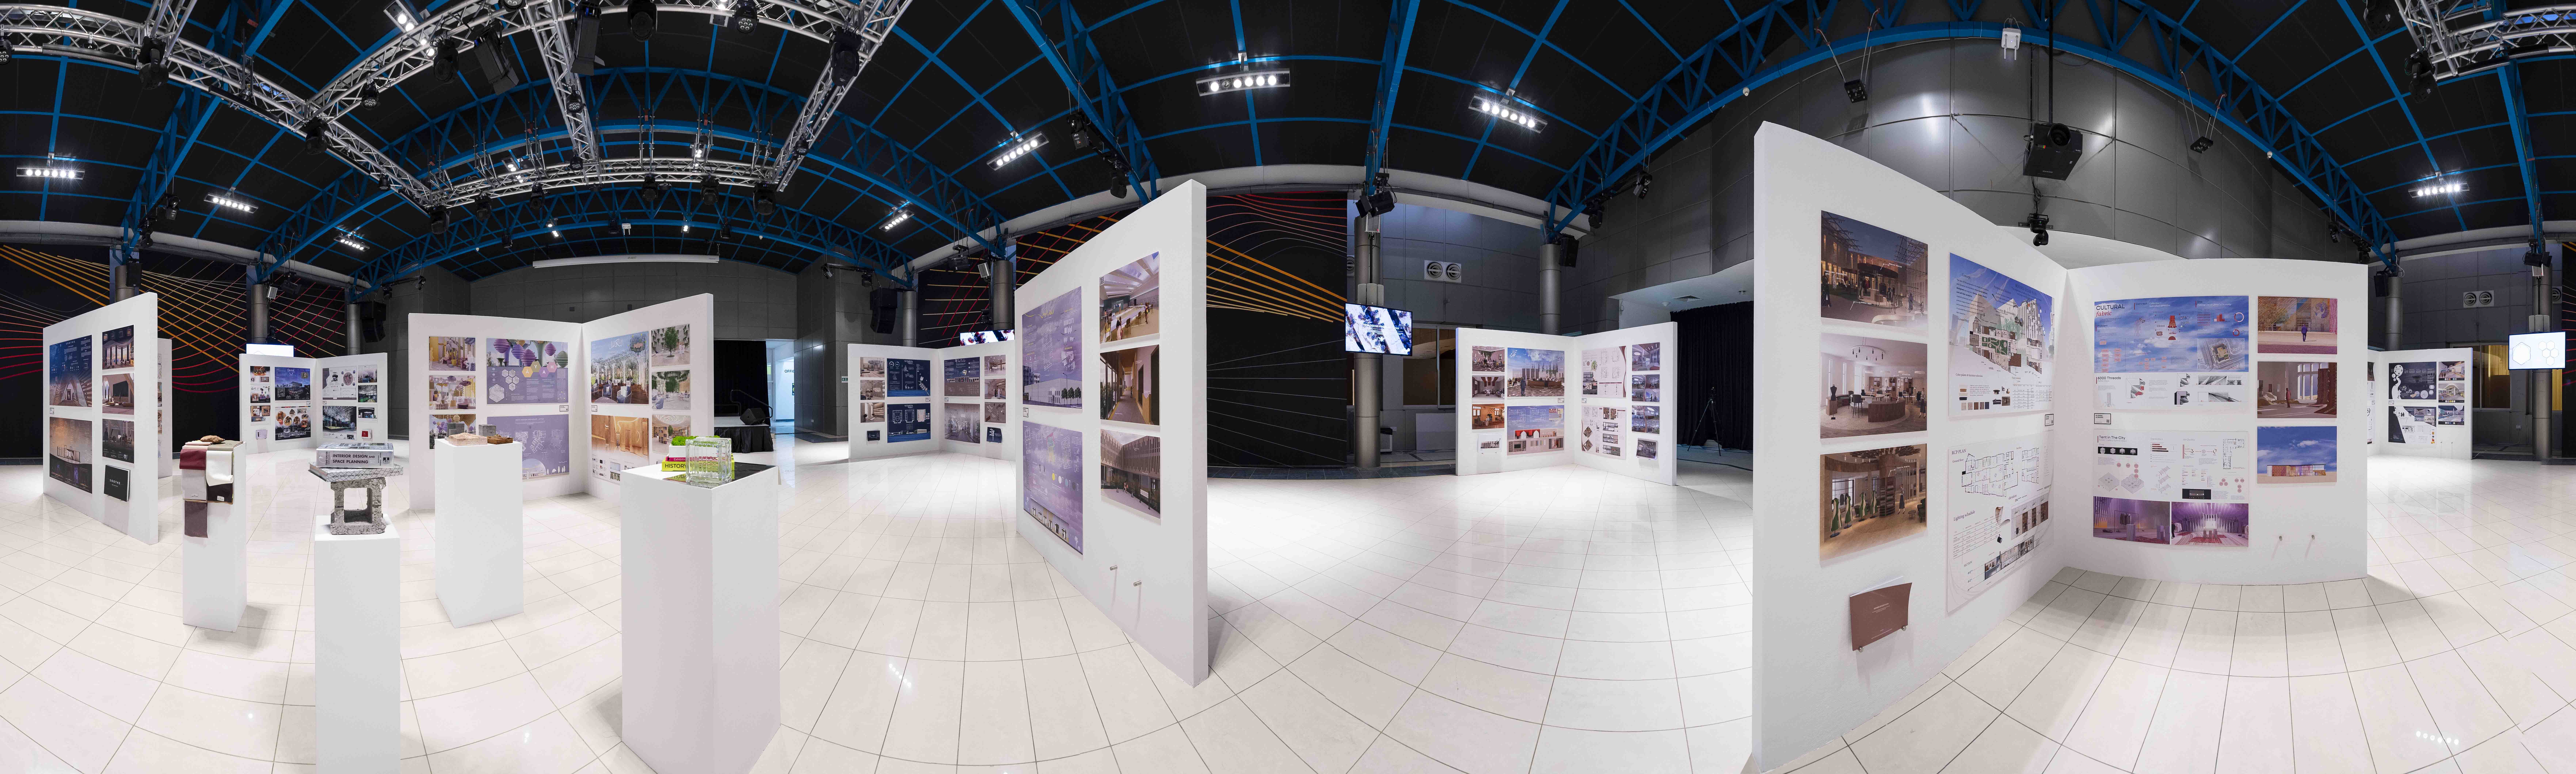 Exhibition View, Interior Design, 2021 ©Raviv Cohen, VCUarts Qatar